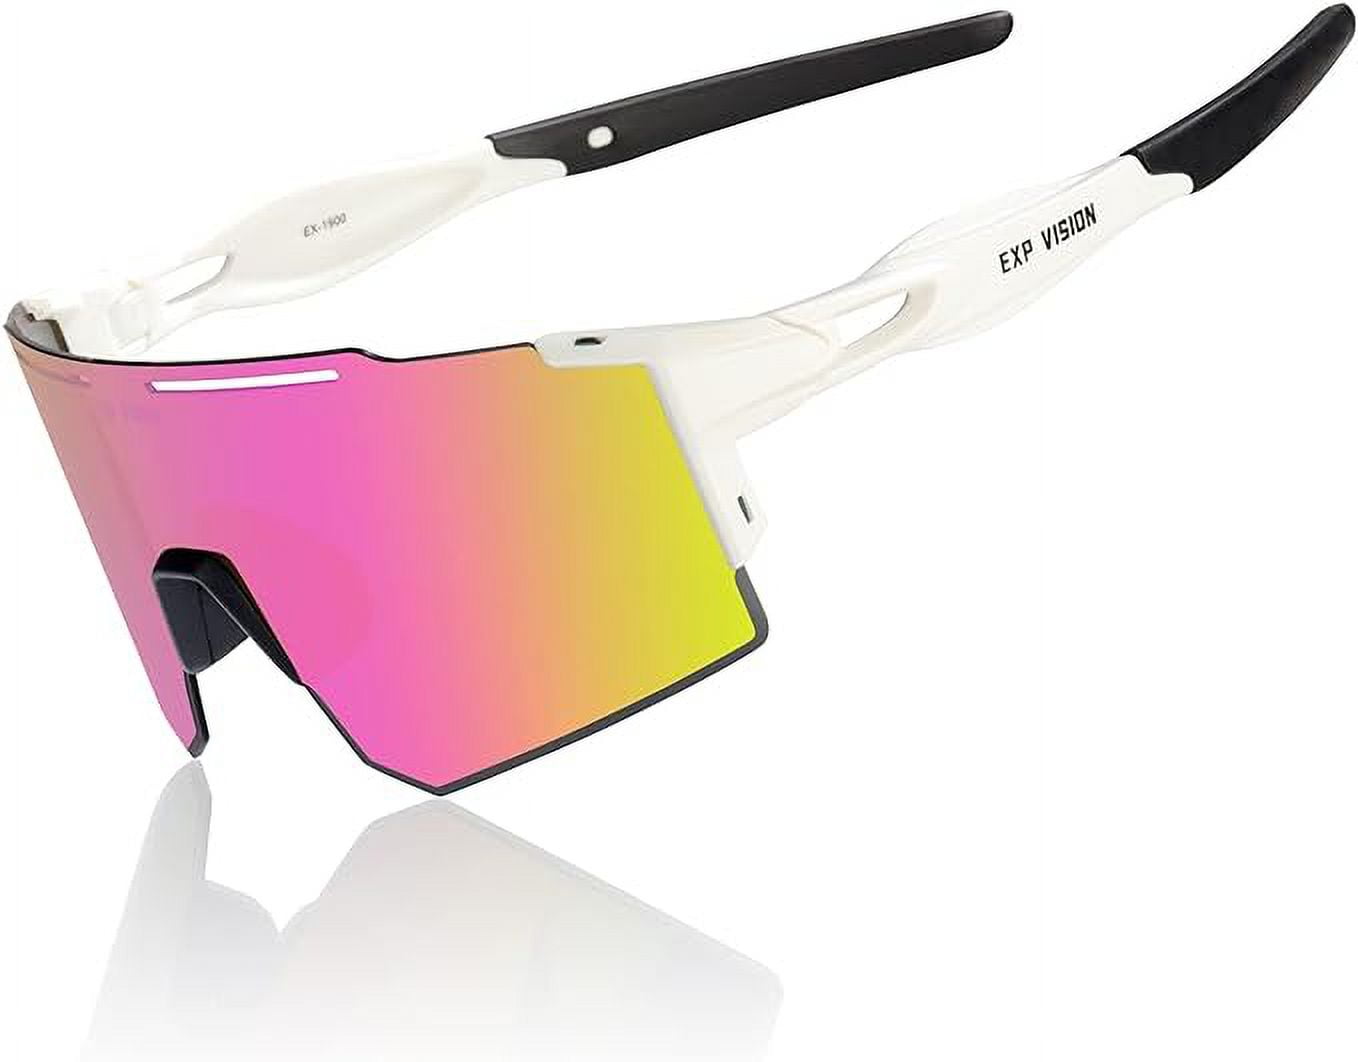 EXP VISION Polarized Cycling Glasses, UV 400 Sports Sunglasses